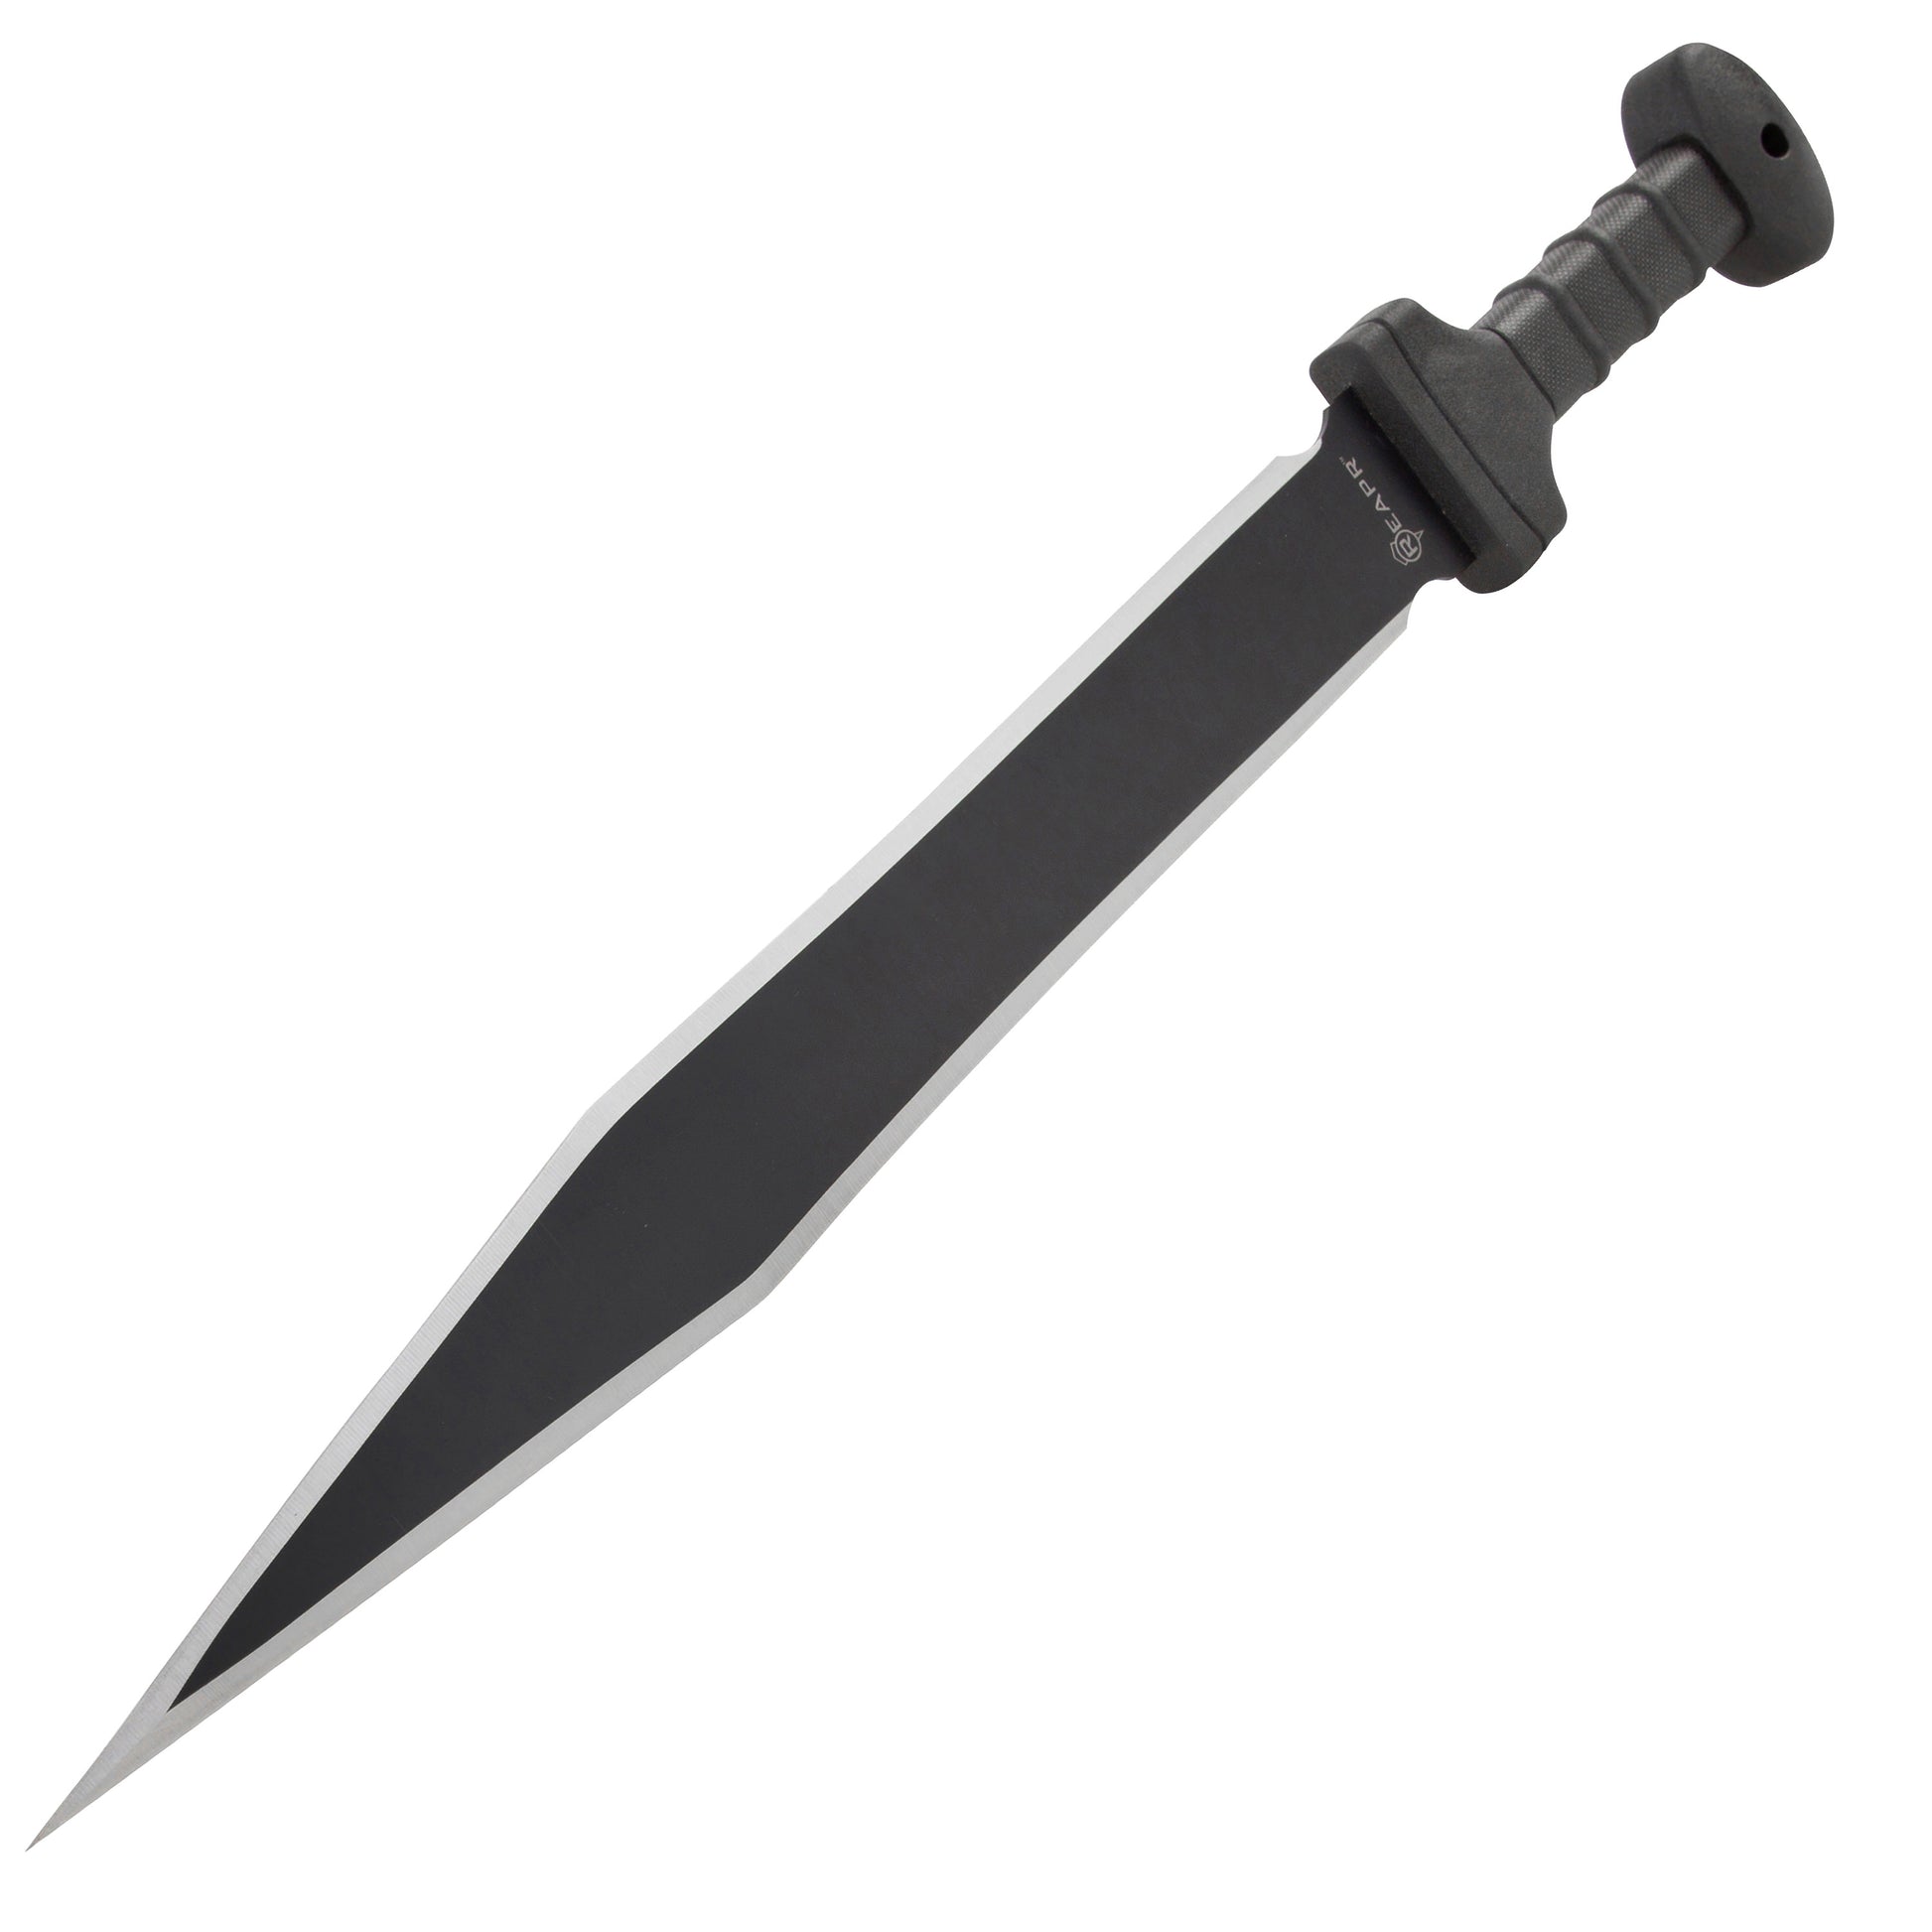 REAPR 11005 Meridius Sword, knife or machete, the Meridius dual edged sword.